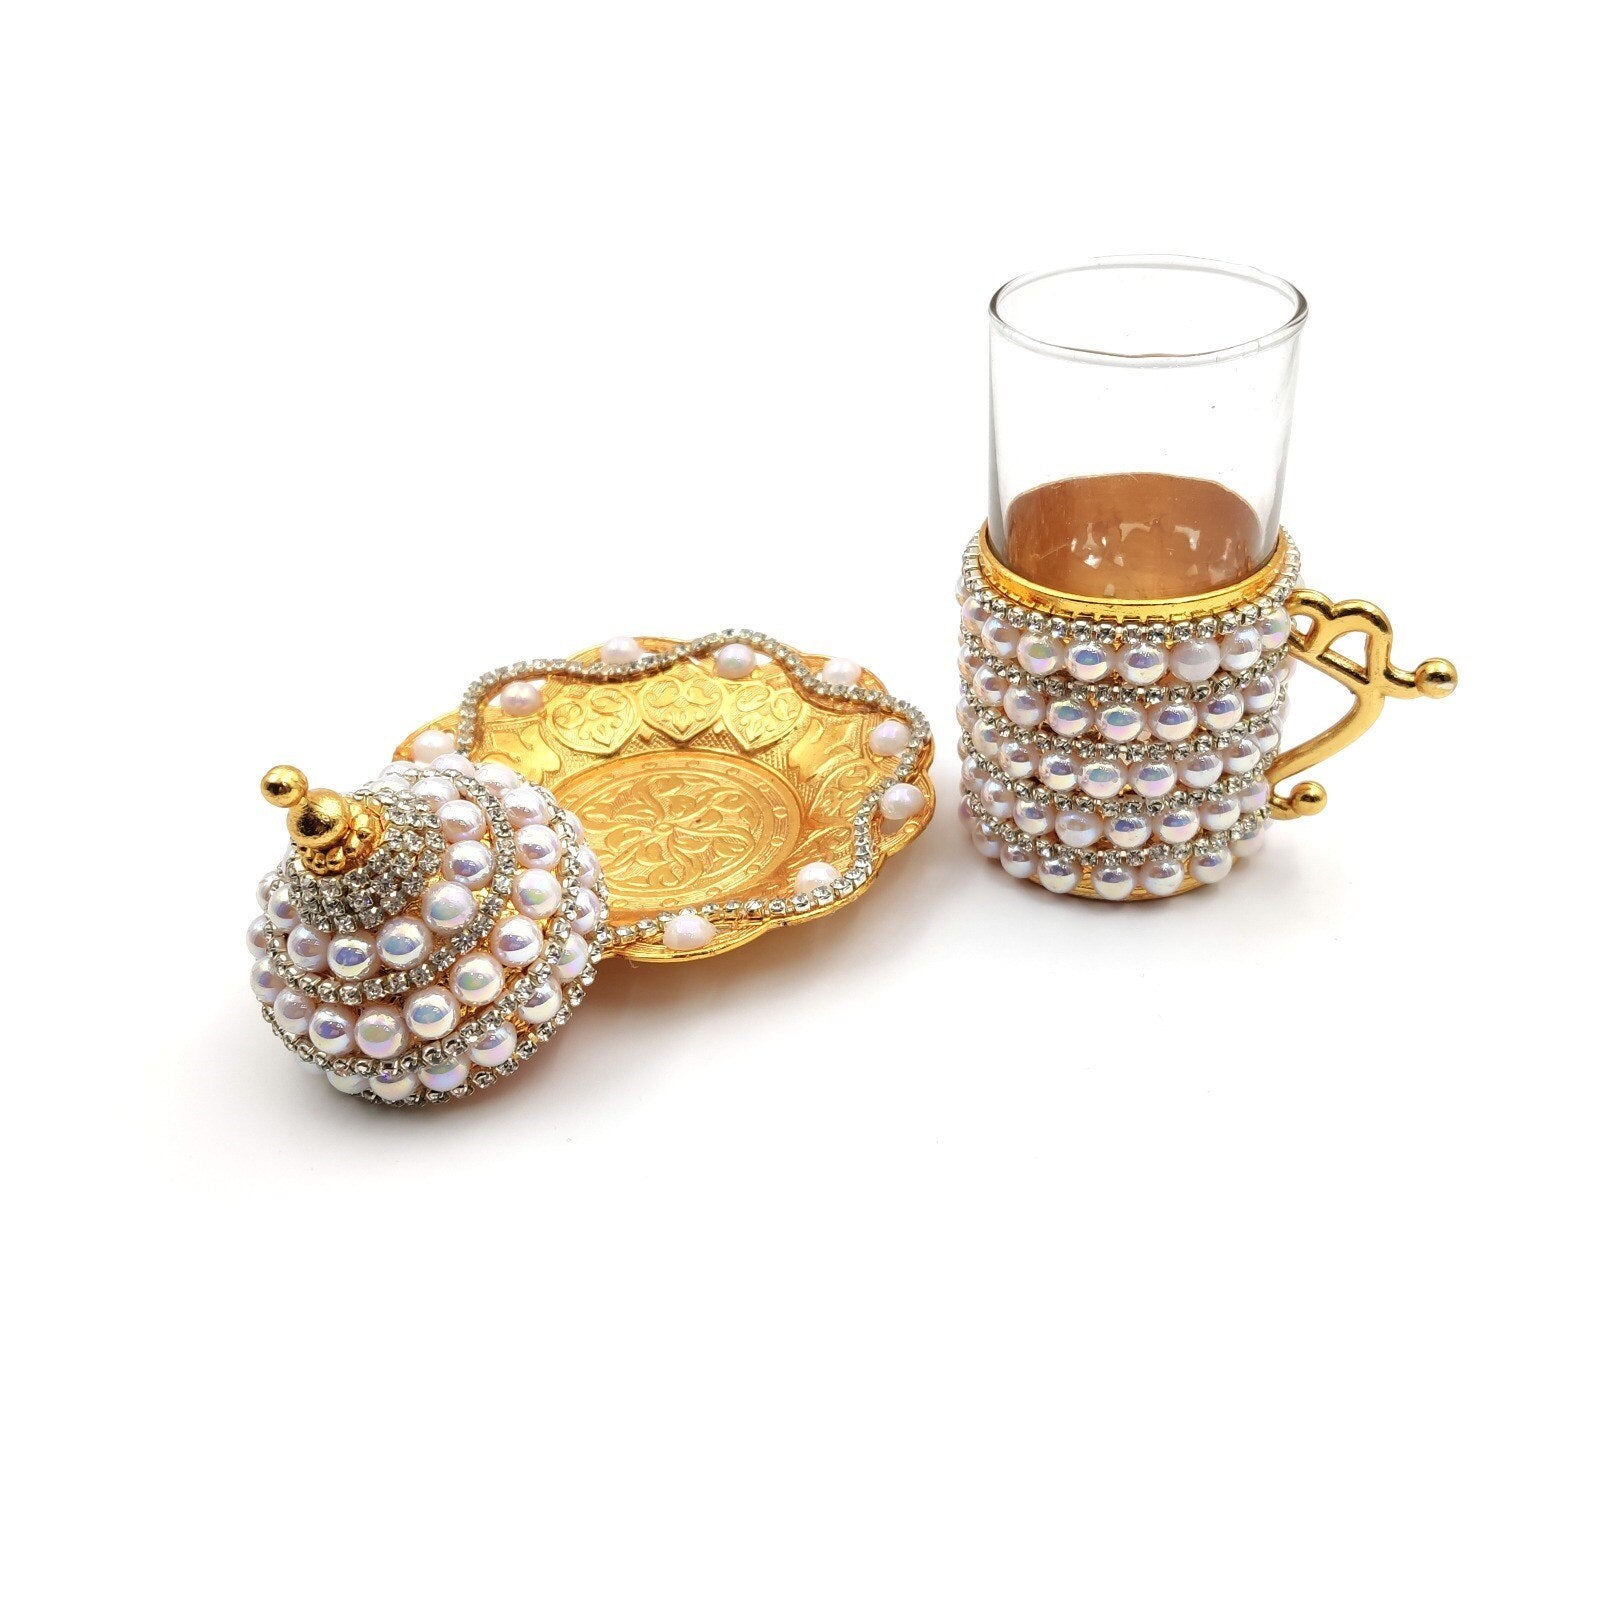 Authentic Handmade Swarovski Turkish Tea Coffee Serving Cup Glass Set